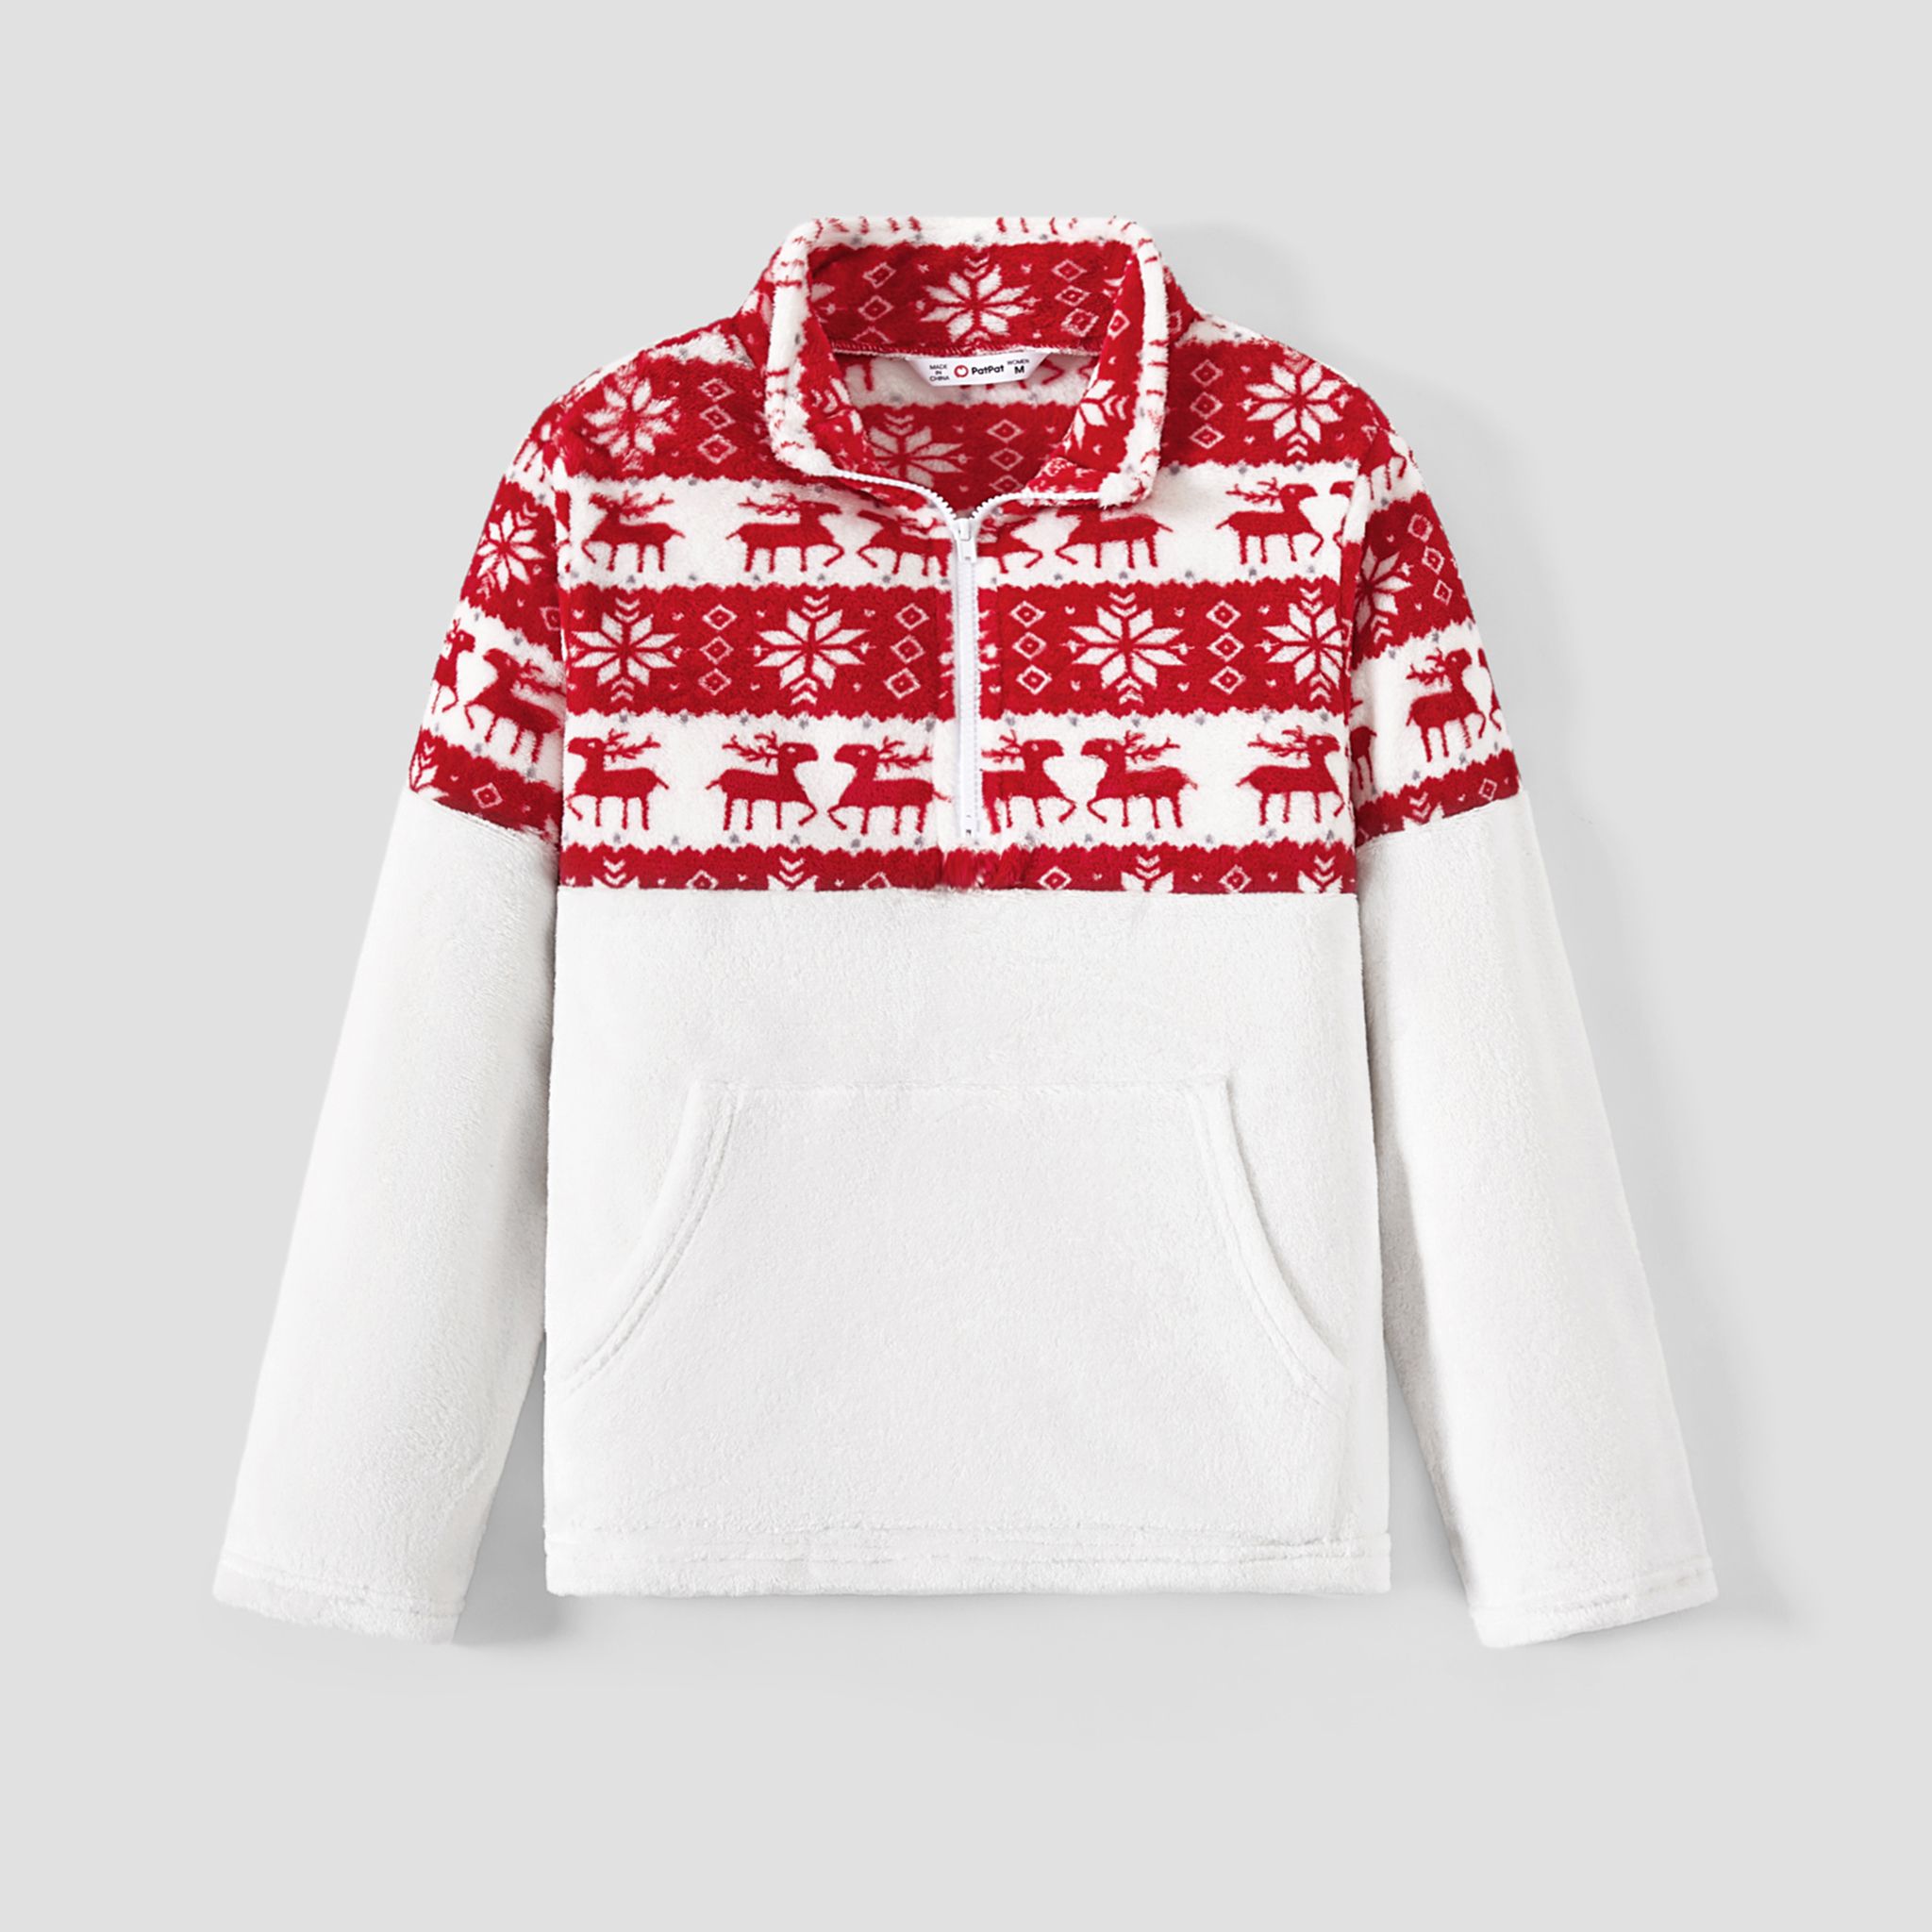 Christmas Family Matching Reindeer Print Stand Collar Fleece Sweatshirts Tops